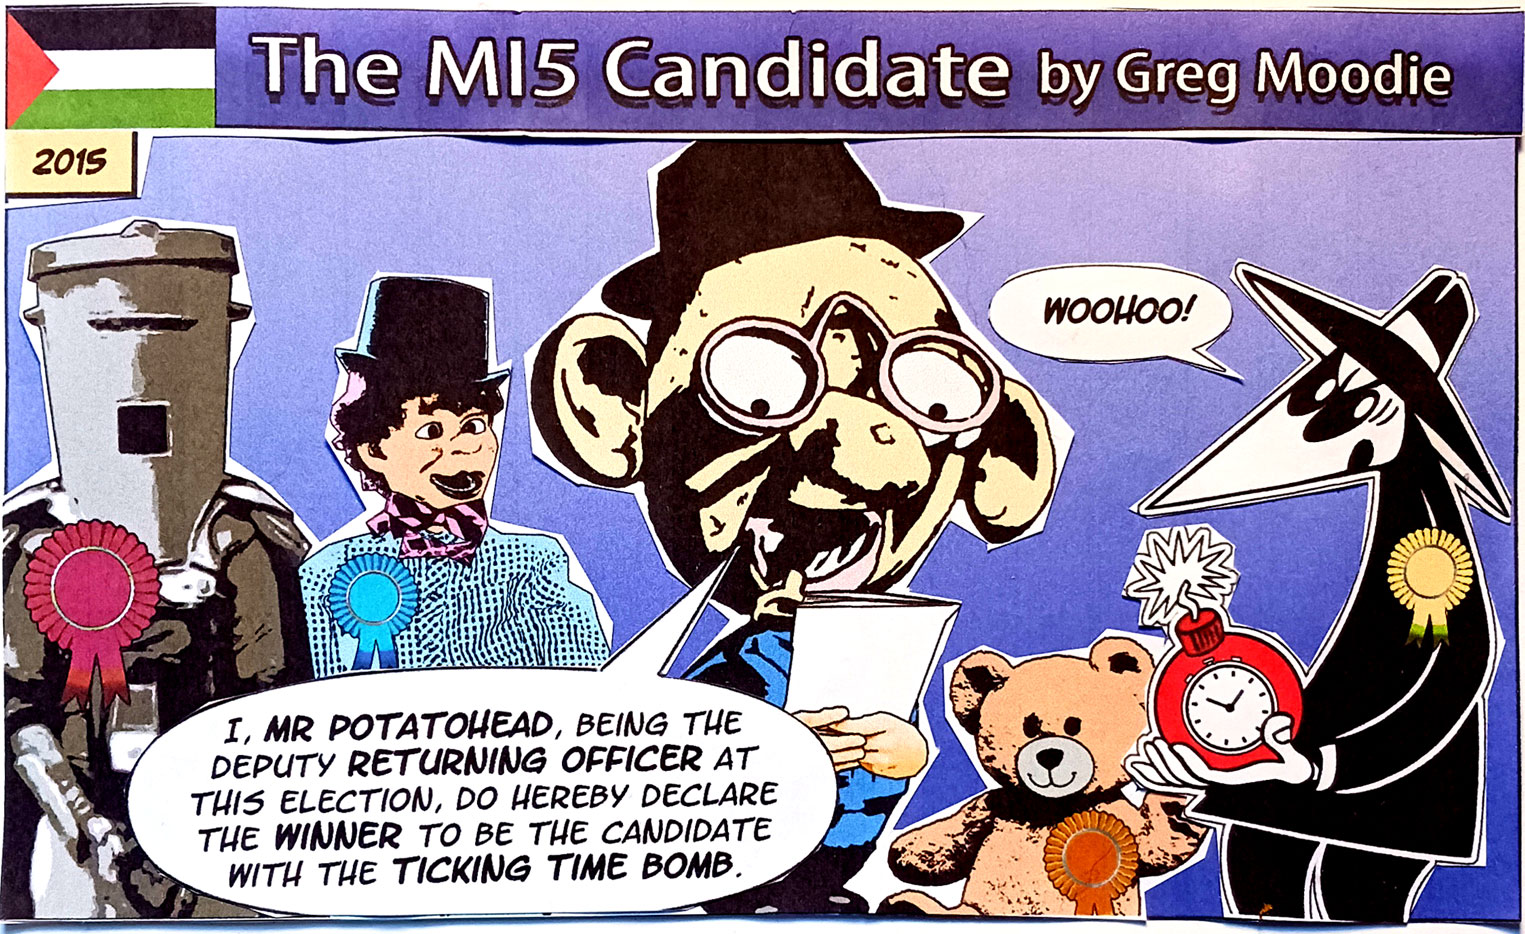 The MI5 Candidate